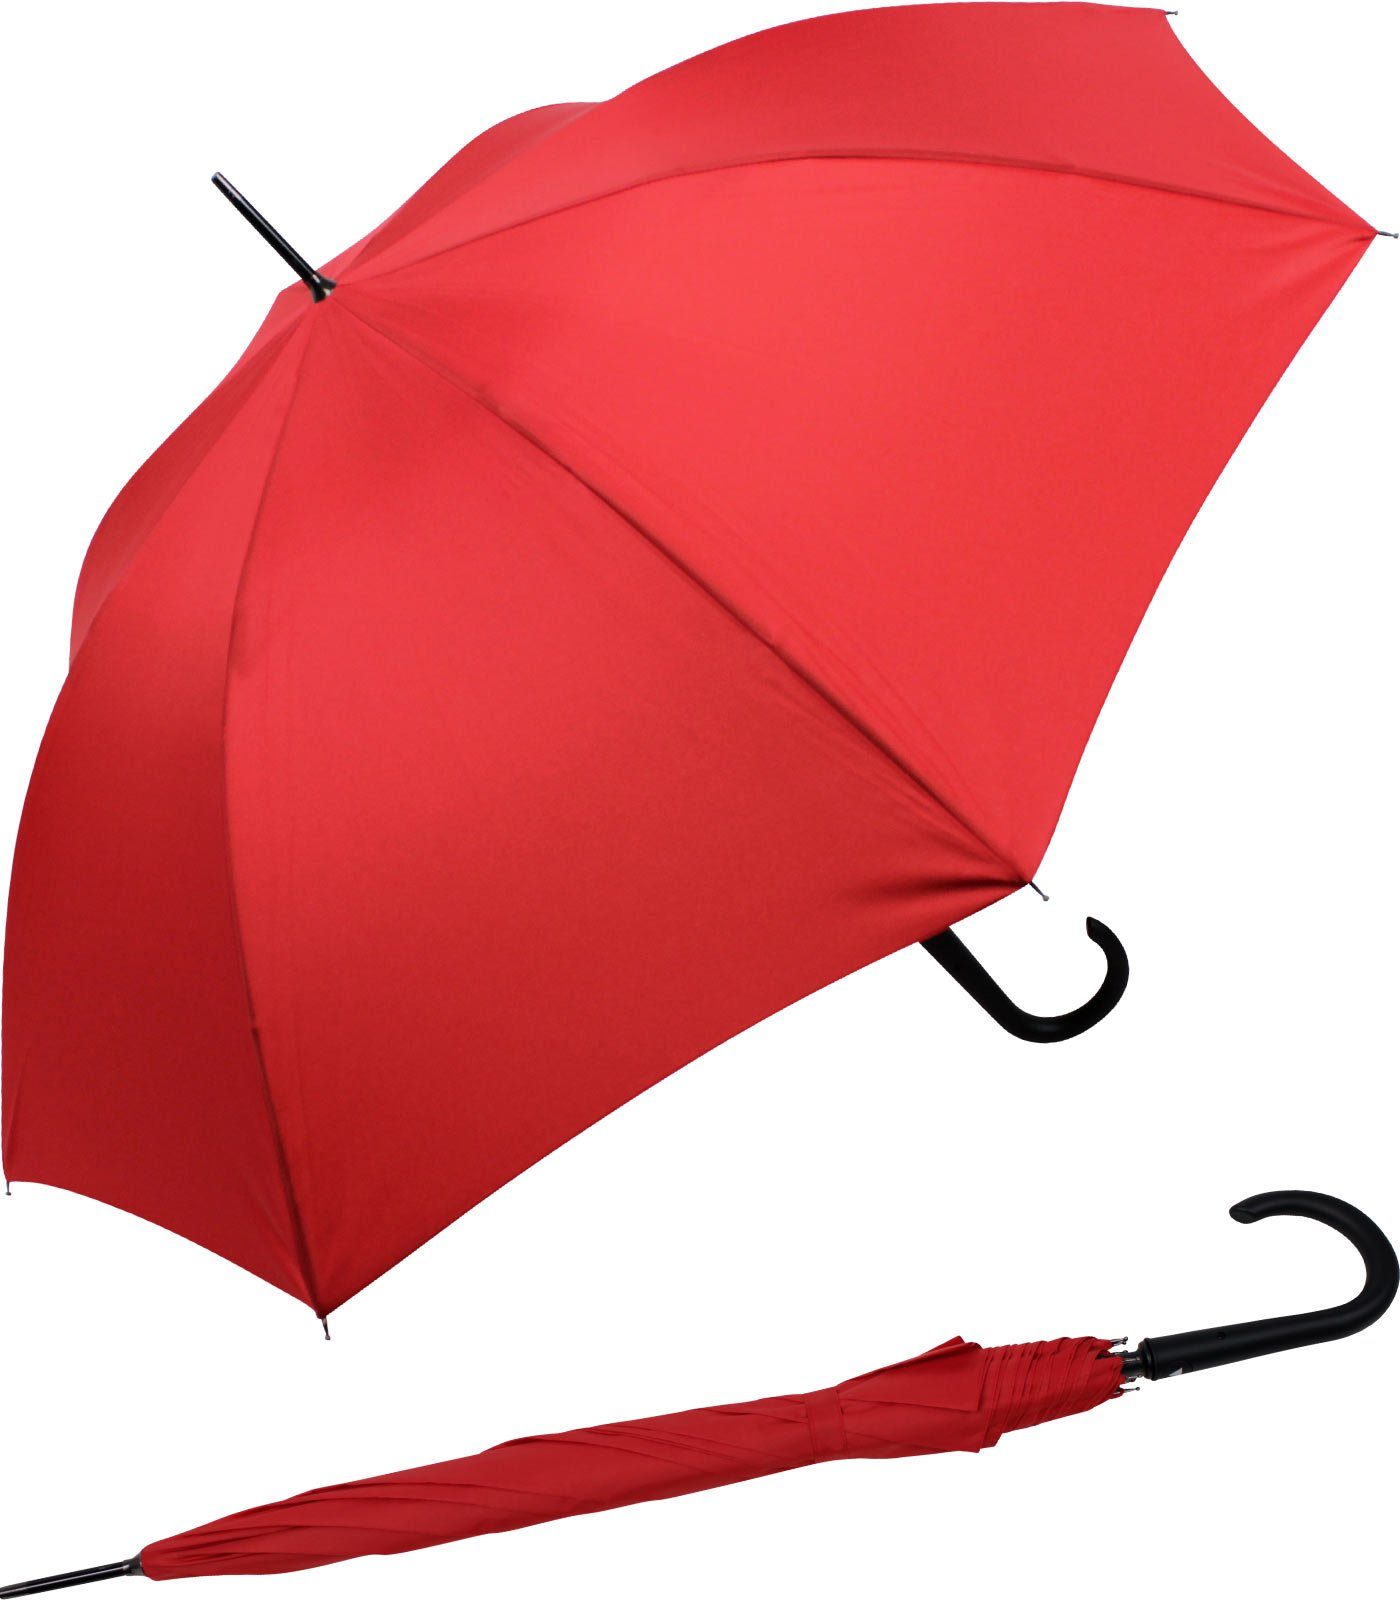 RS-Versand Langregenschirm großer stabiler Regenschirm mit Auf-Automatik, Stahl-Fiberglas-Gestell, integrierter Auslöseknopf rot